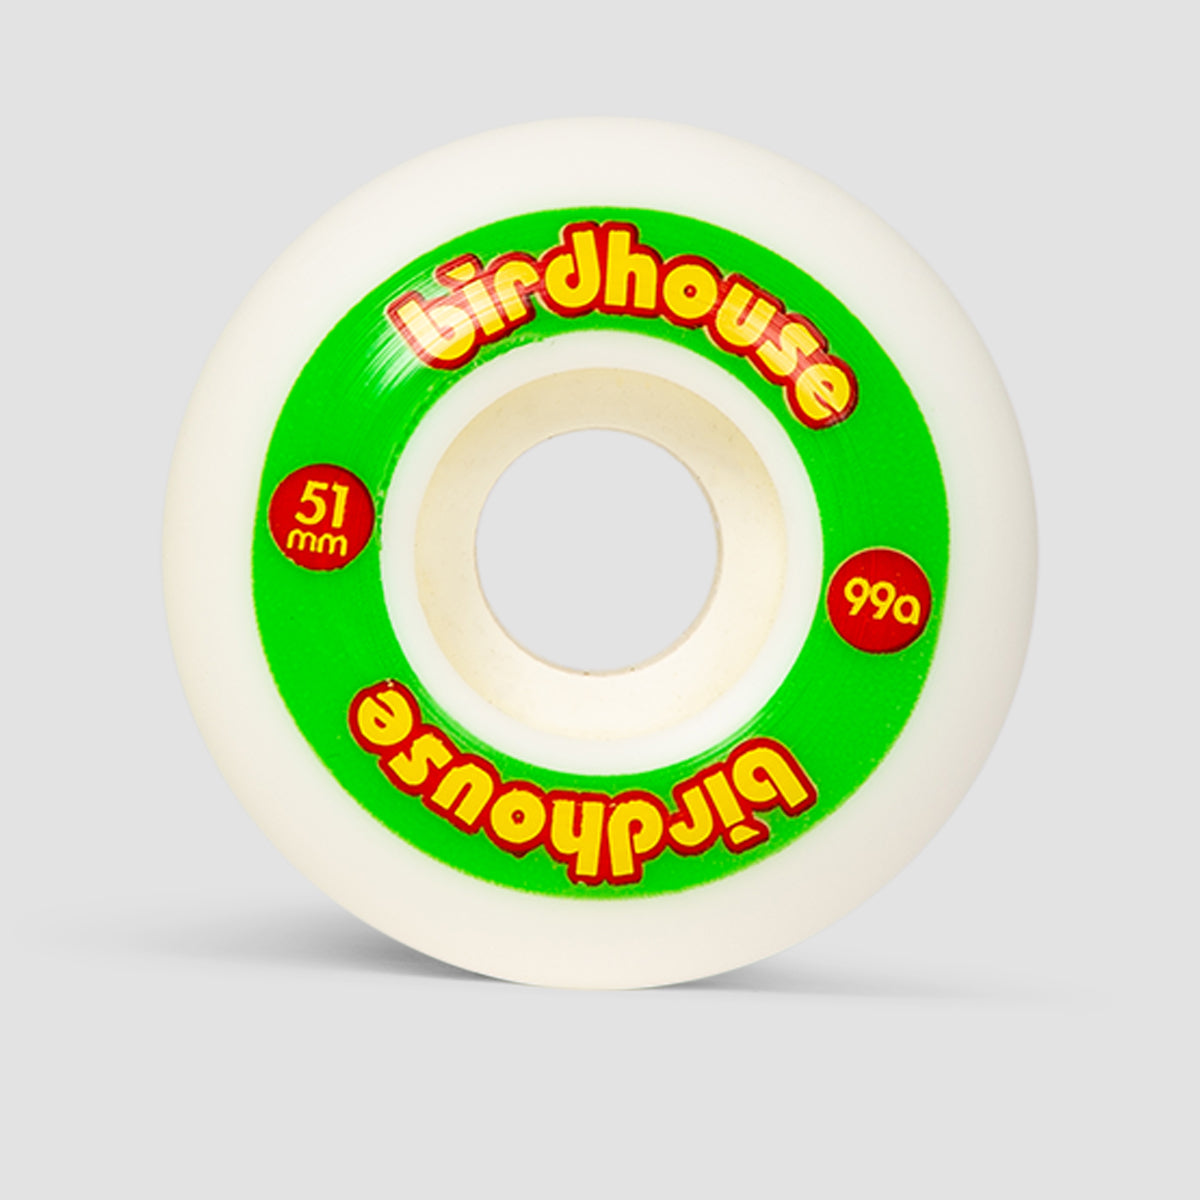 Birdhouse Logo 99a Skateboard Wheels Rasta 51mm